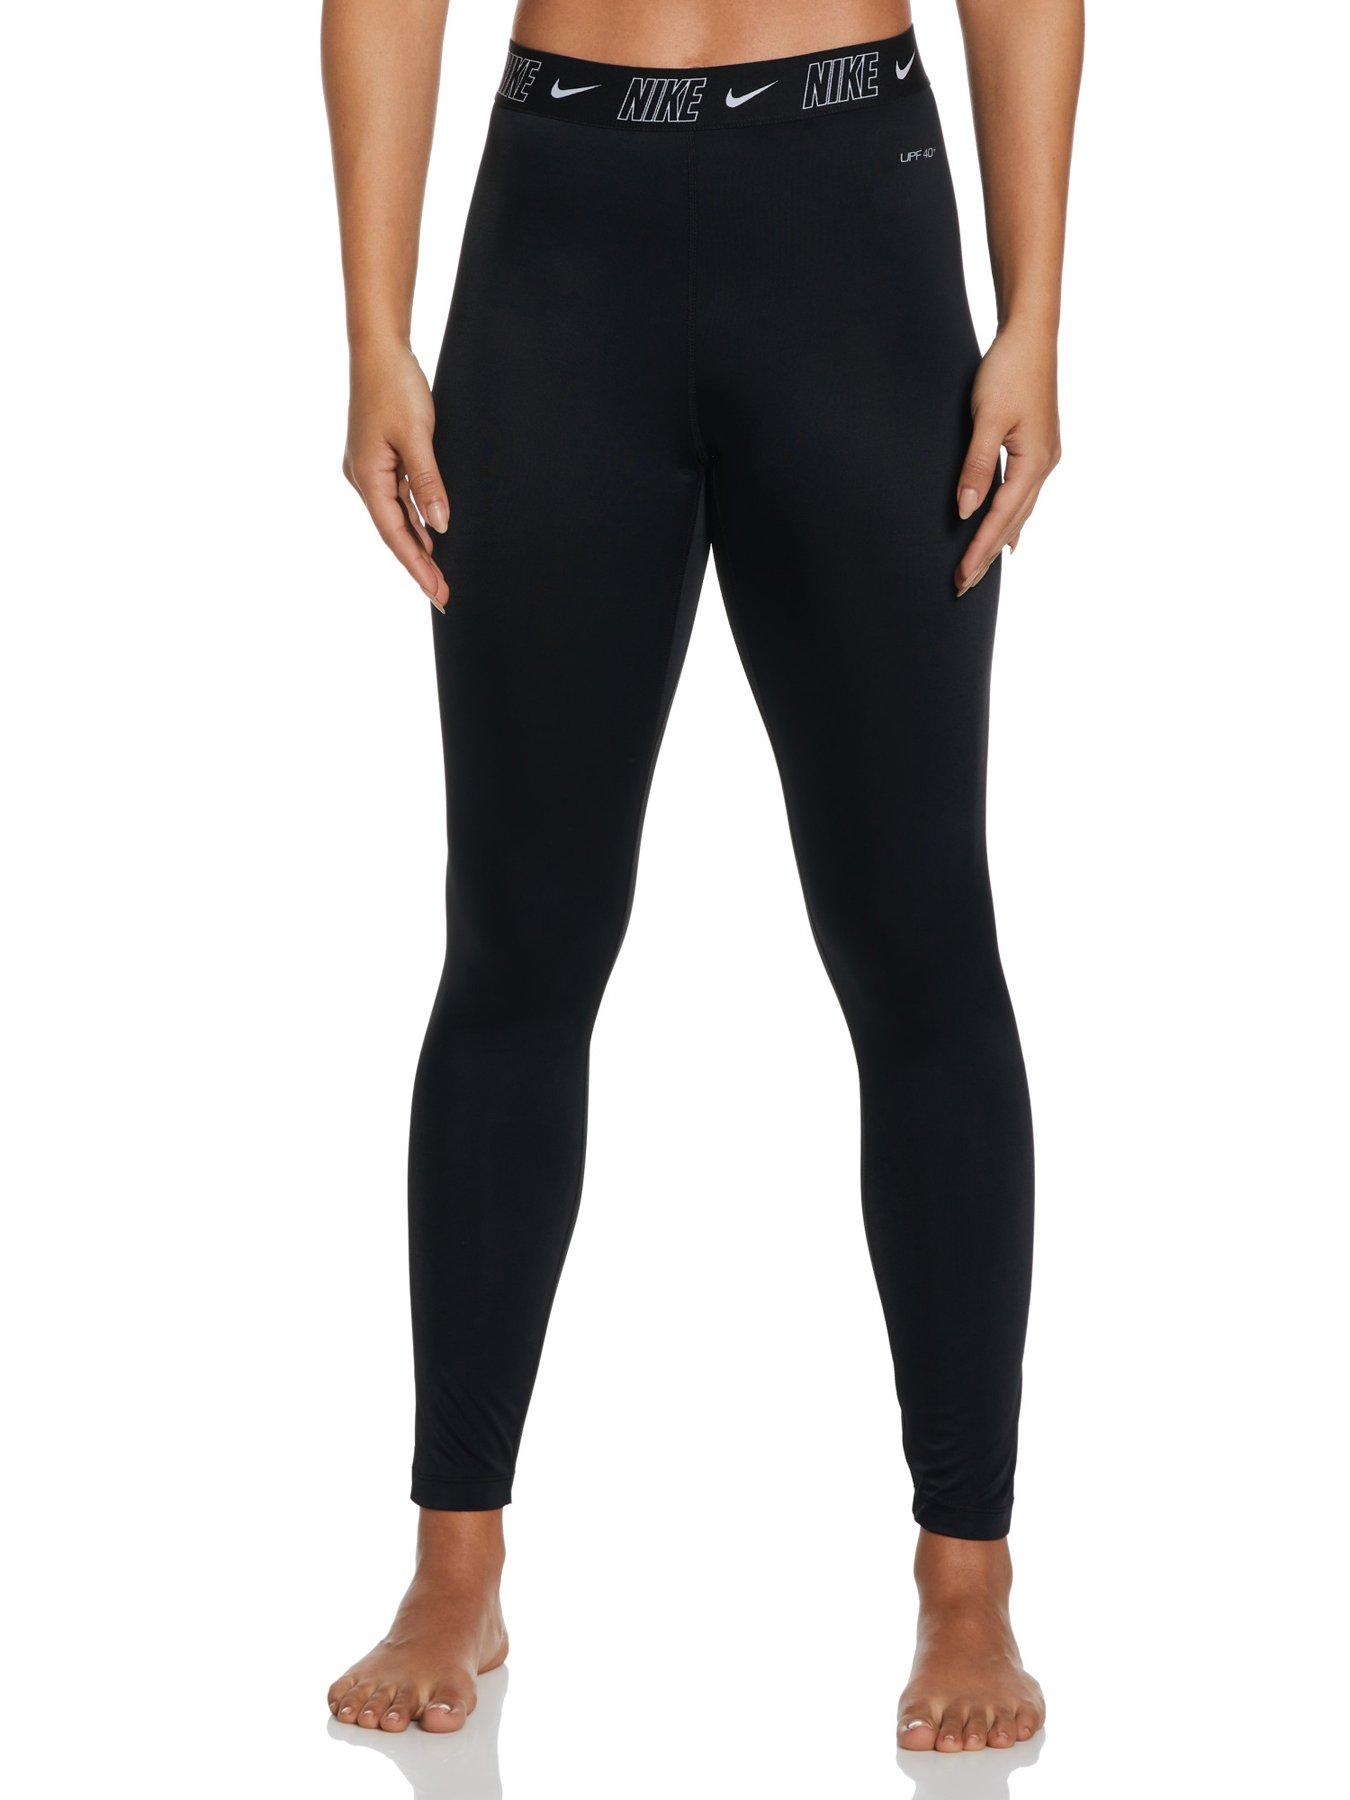 Nike Pants Womens XS Black Gray Dri Fit Leopard Print High Rise Leggings